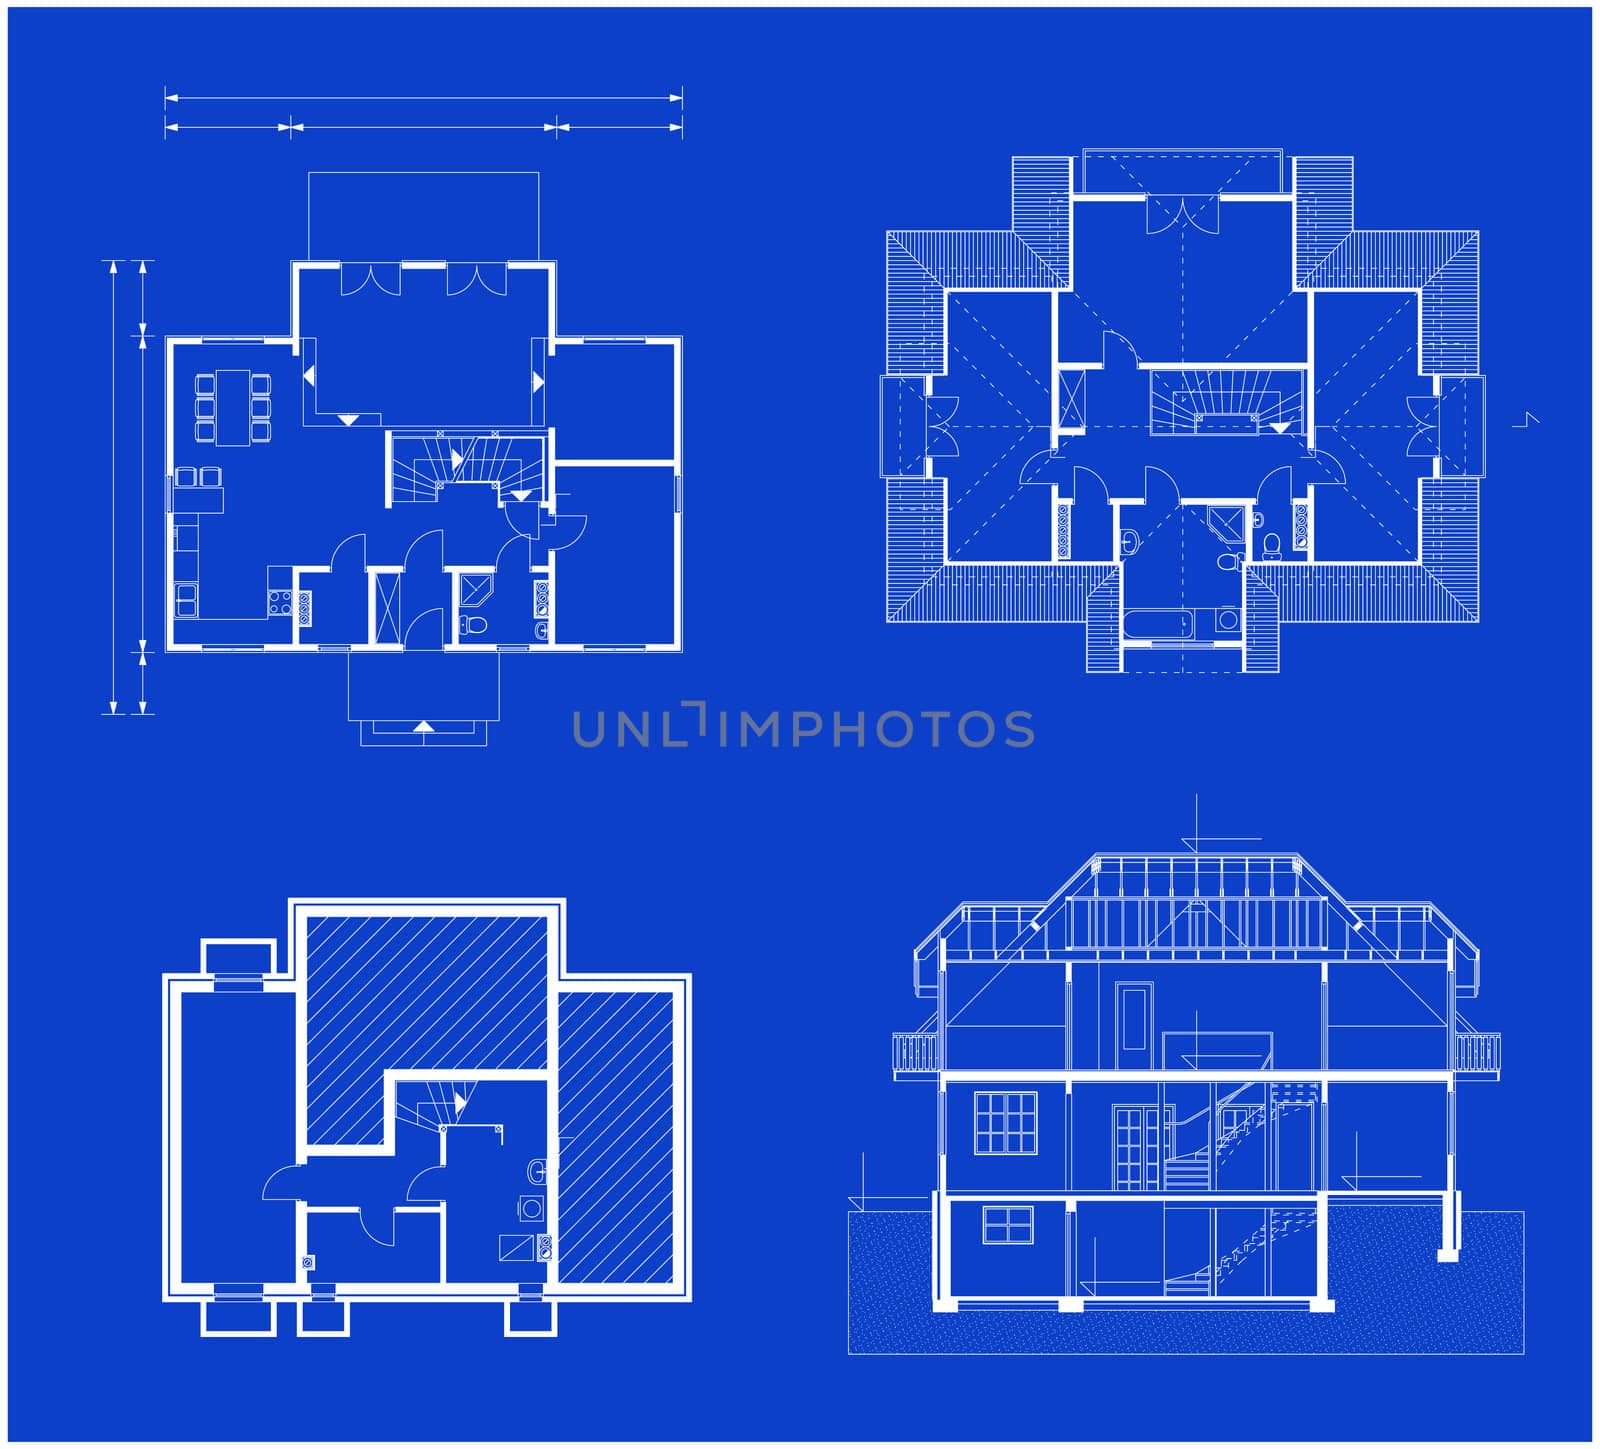 A blueprint for building design